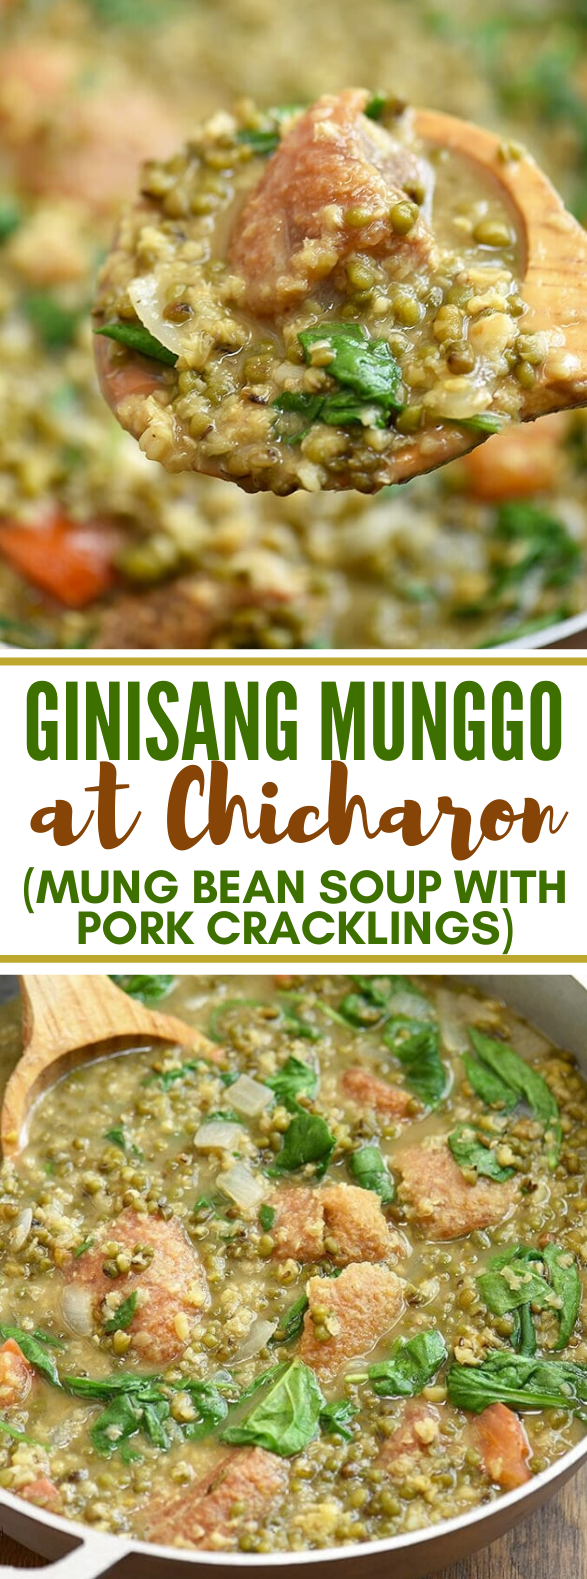 Ginisang Munggo at Chicharon #dinner #budgetfriendly